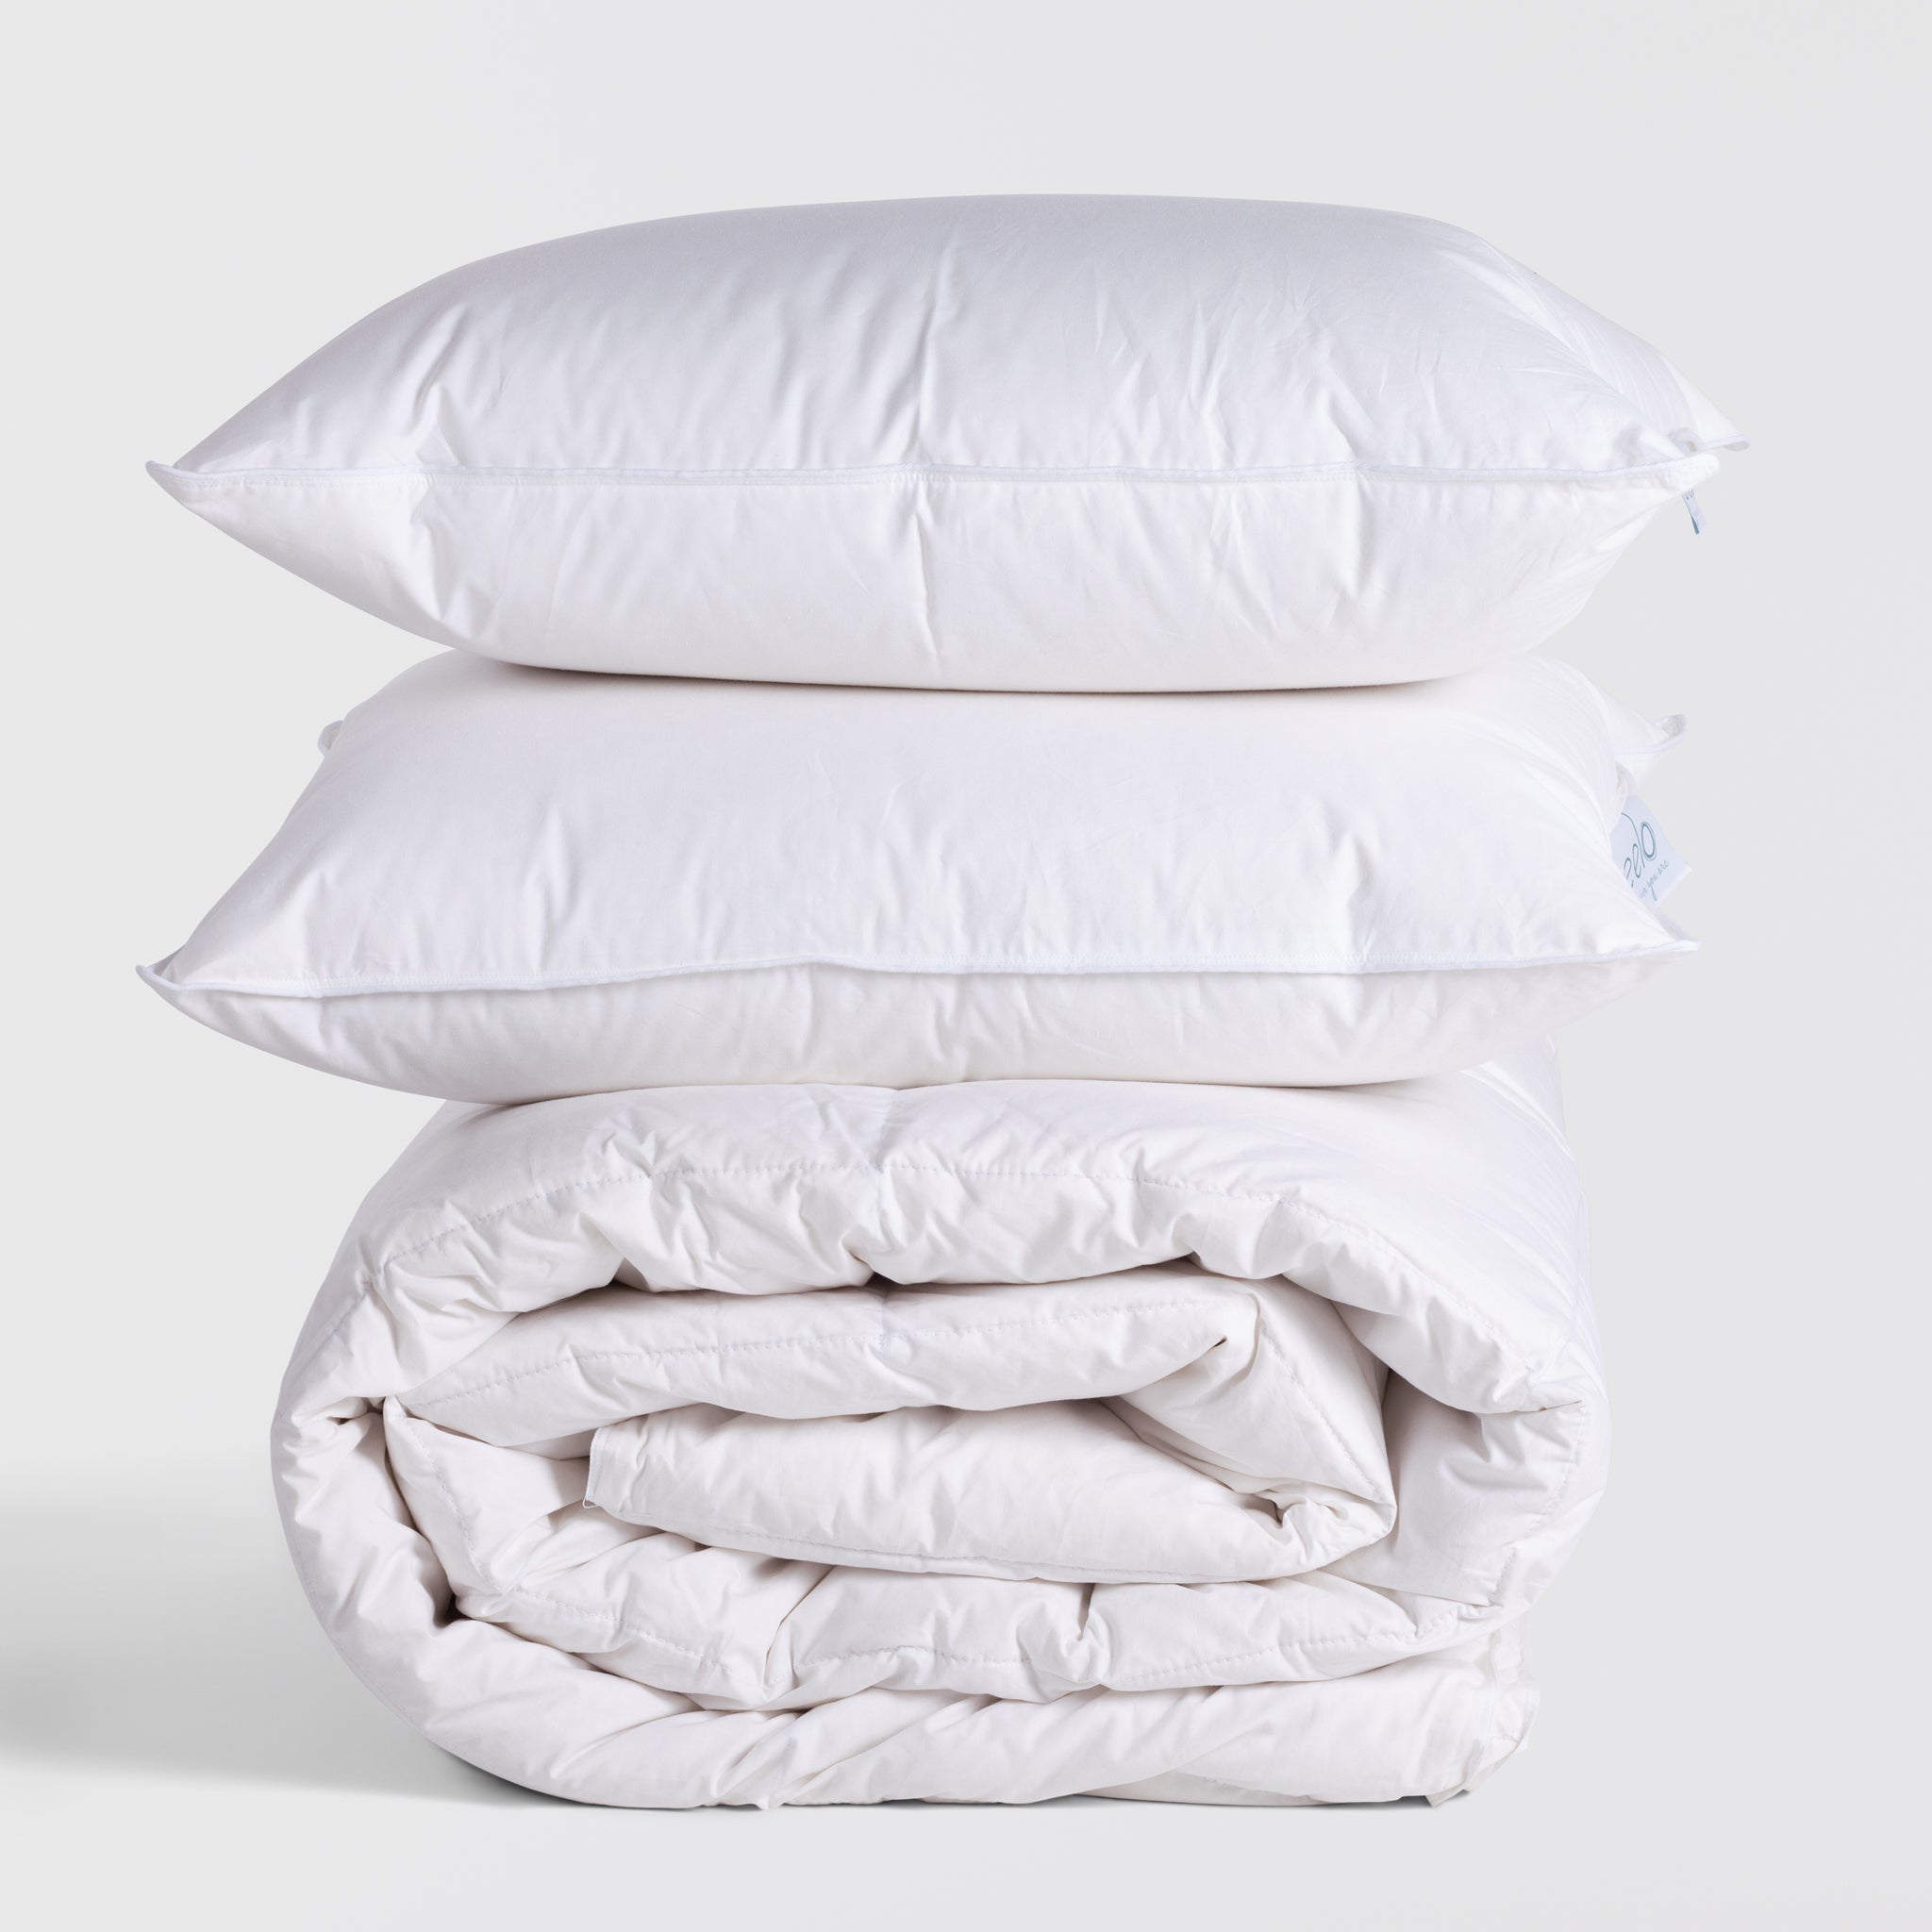 eelo Duvet Insert and Standard Down Pillows, White